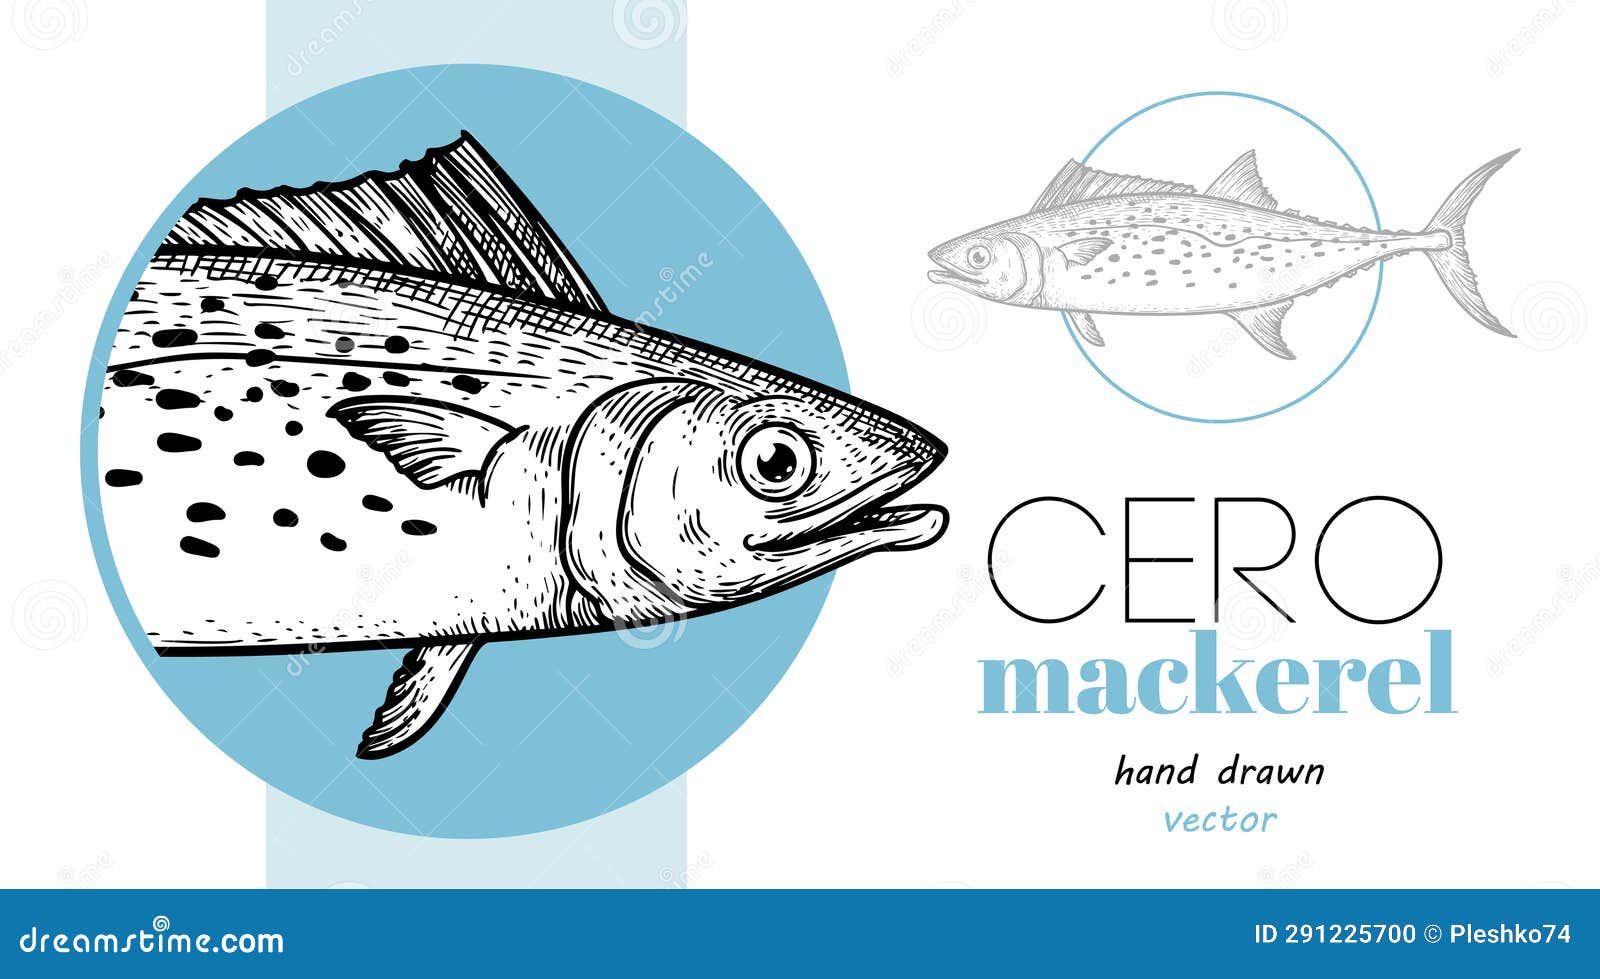 hand drawn sketch style cero mackerel  template. fish restaurant menu .